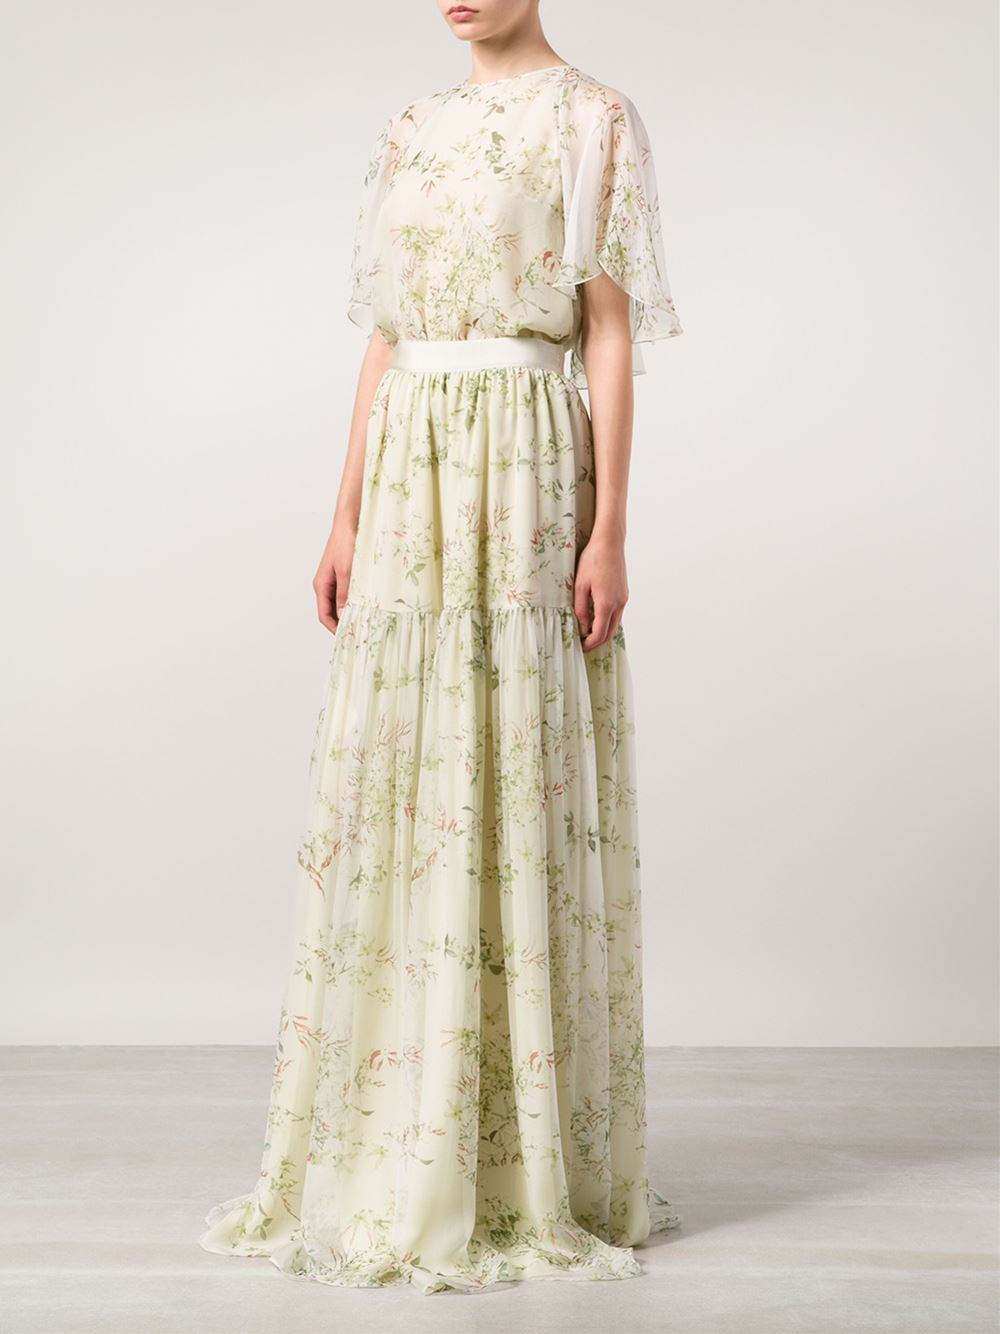 Lyst - Giambattista Valli Floral Print Long Dress in Green